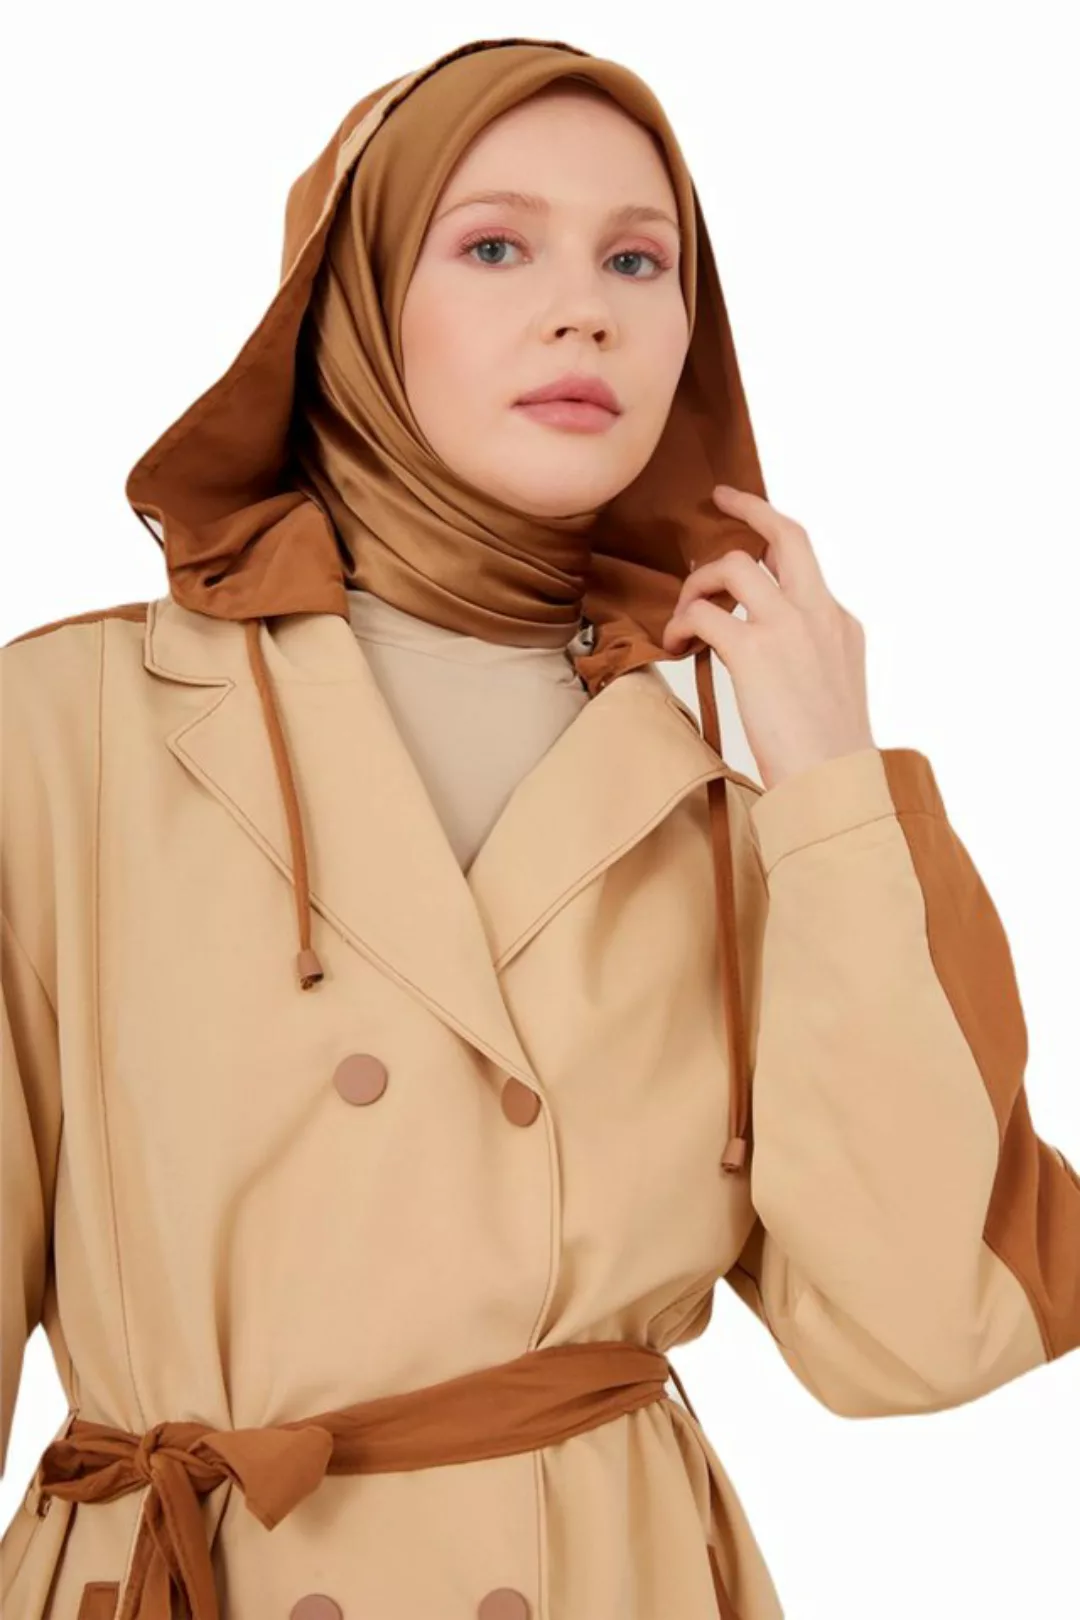 ARMİNE Langmantel Armine Mobile Hooded Colorblack Cap – Moderne und elegant günstig online kaufen